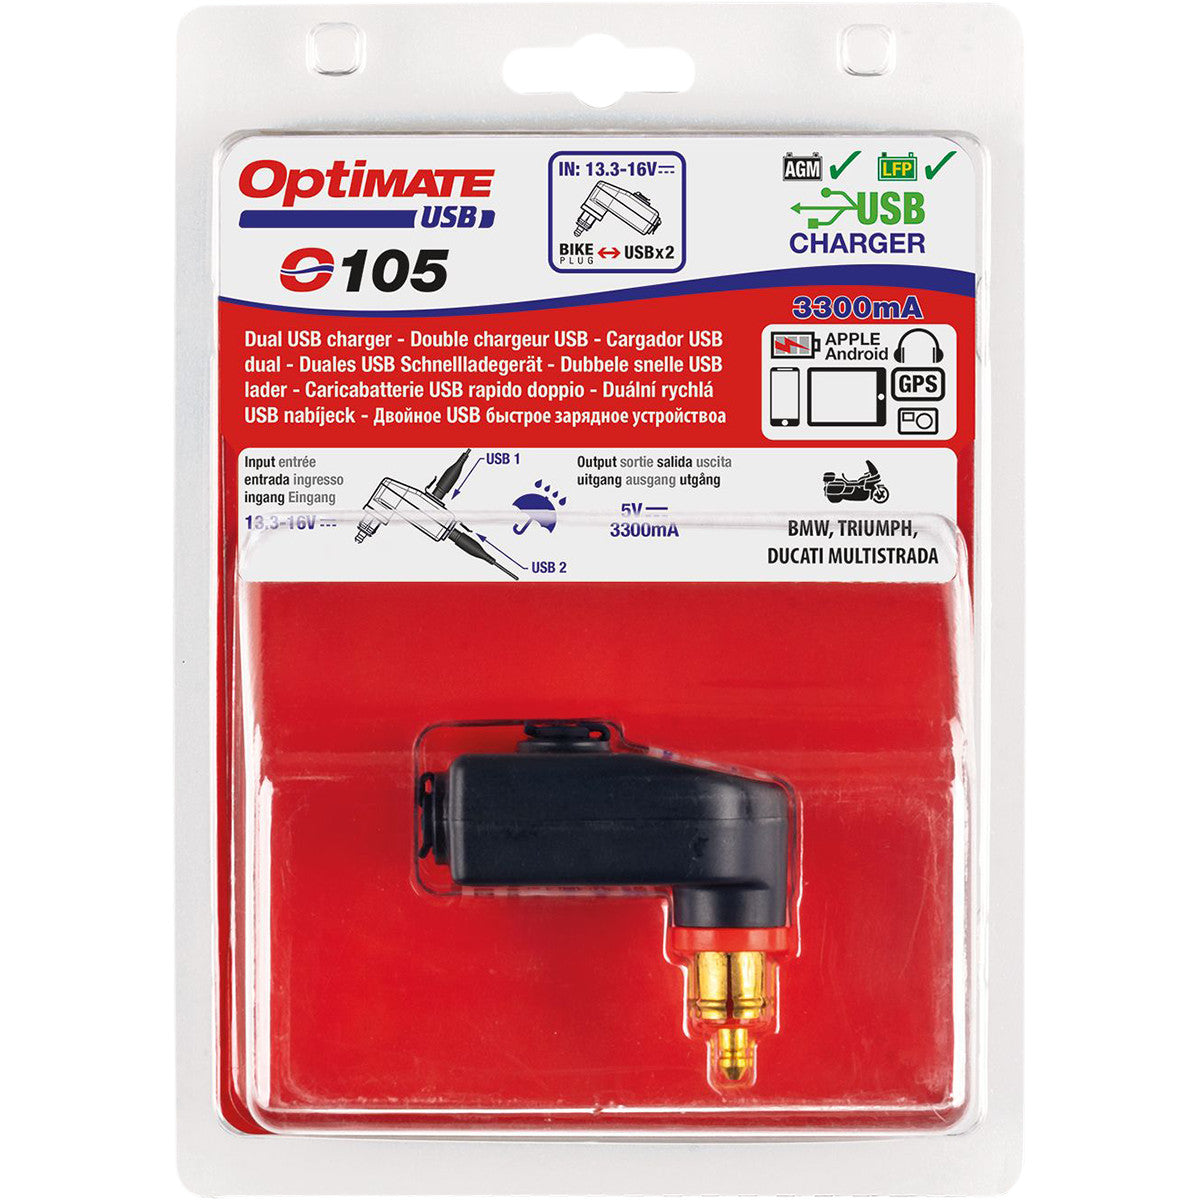 OPTIMIEREN SIE DEN USB O-105 SMART 3300mA DUAL OUTPUT USB-LADEGERÄT MIT BIKE-STECKER